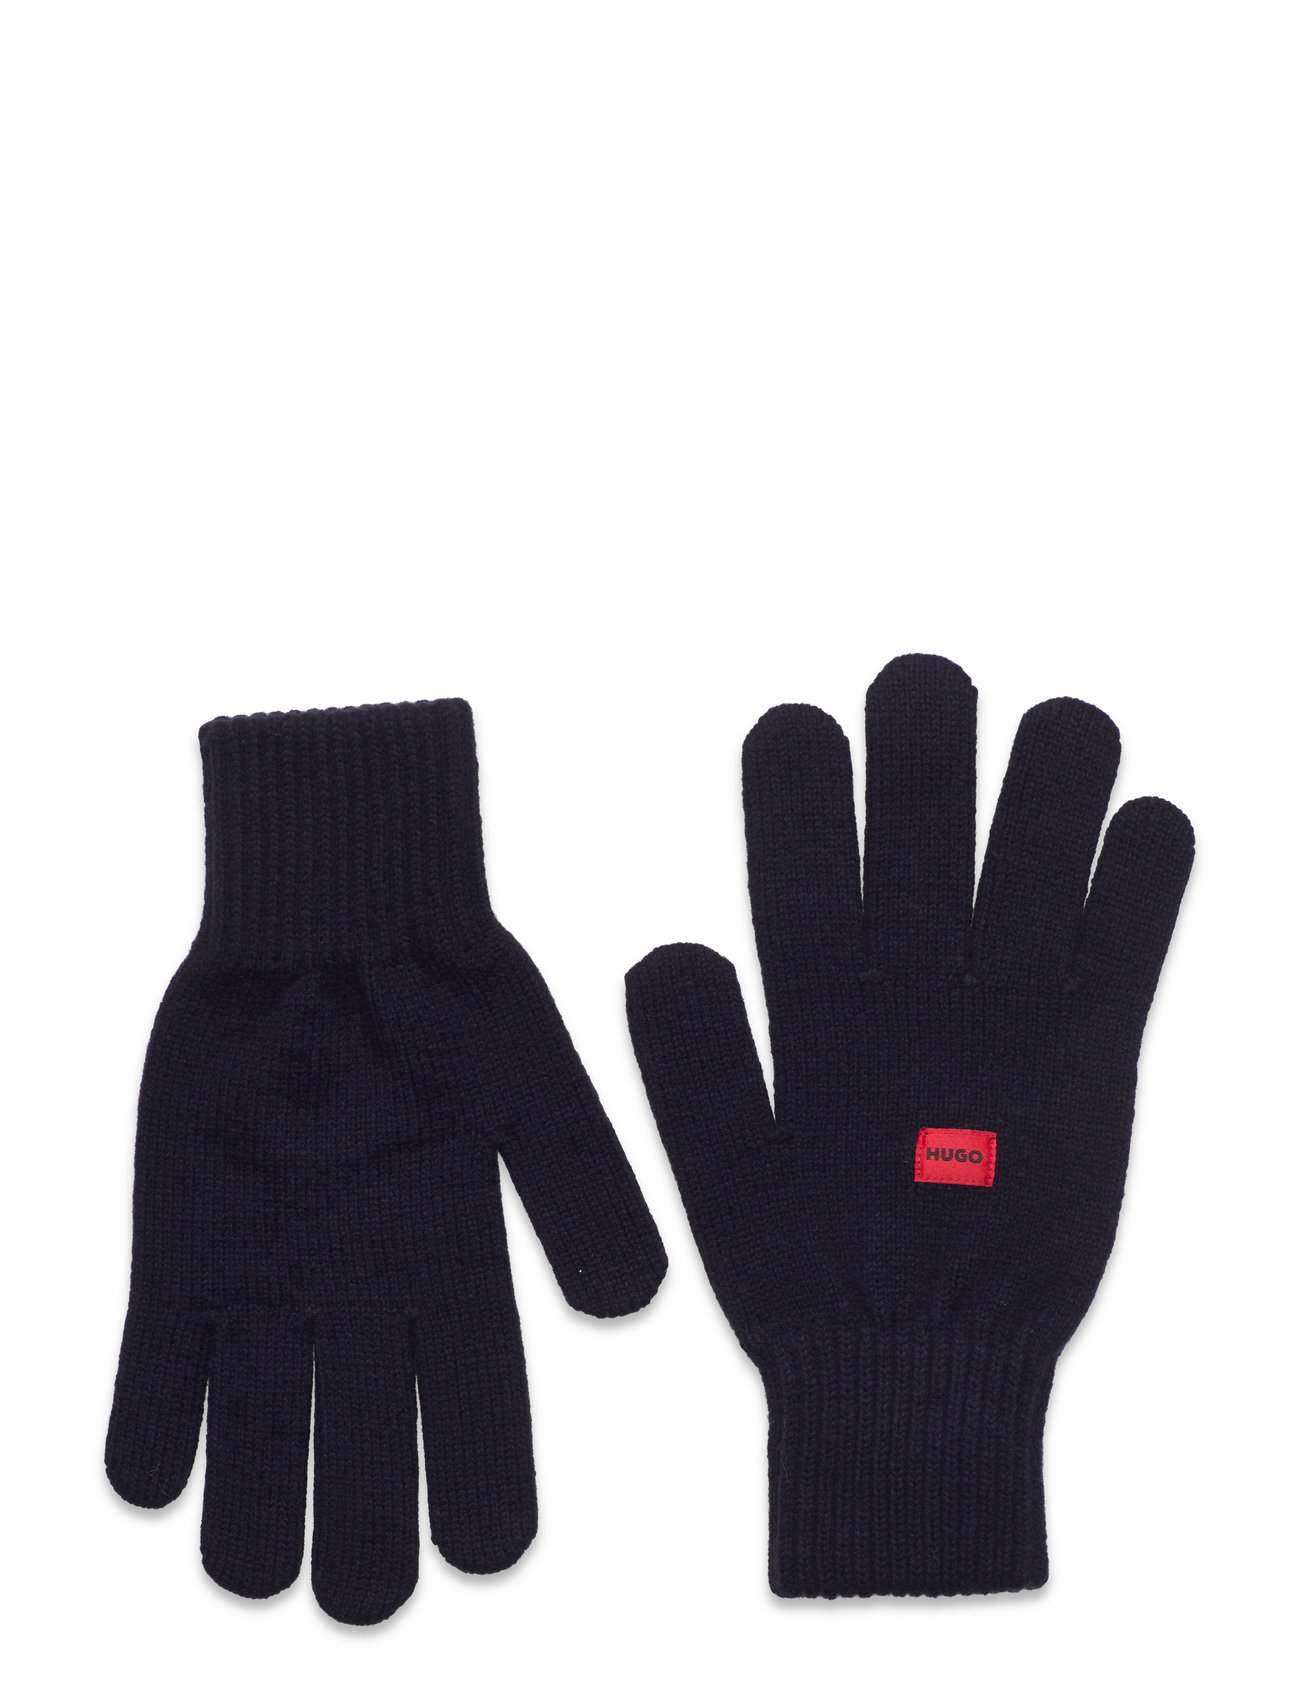 Waff - HUGO 3 Gloves